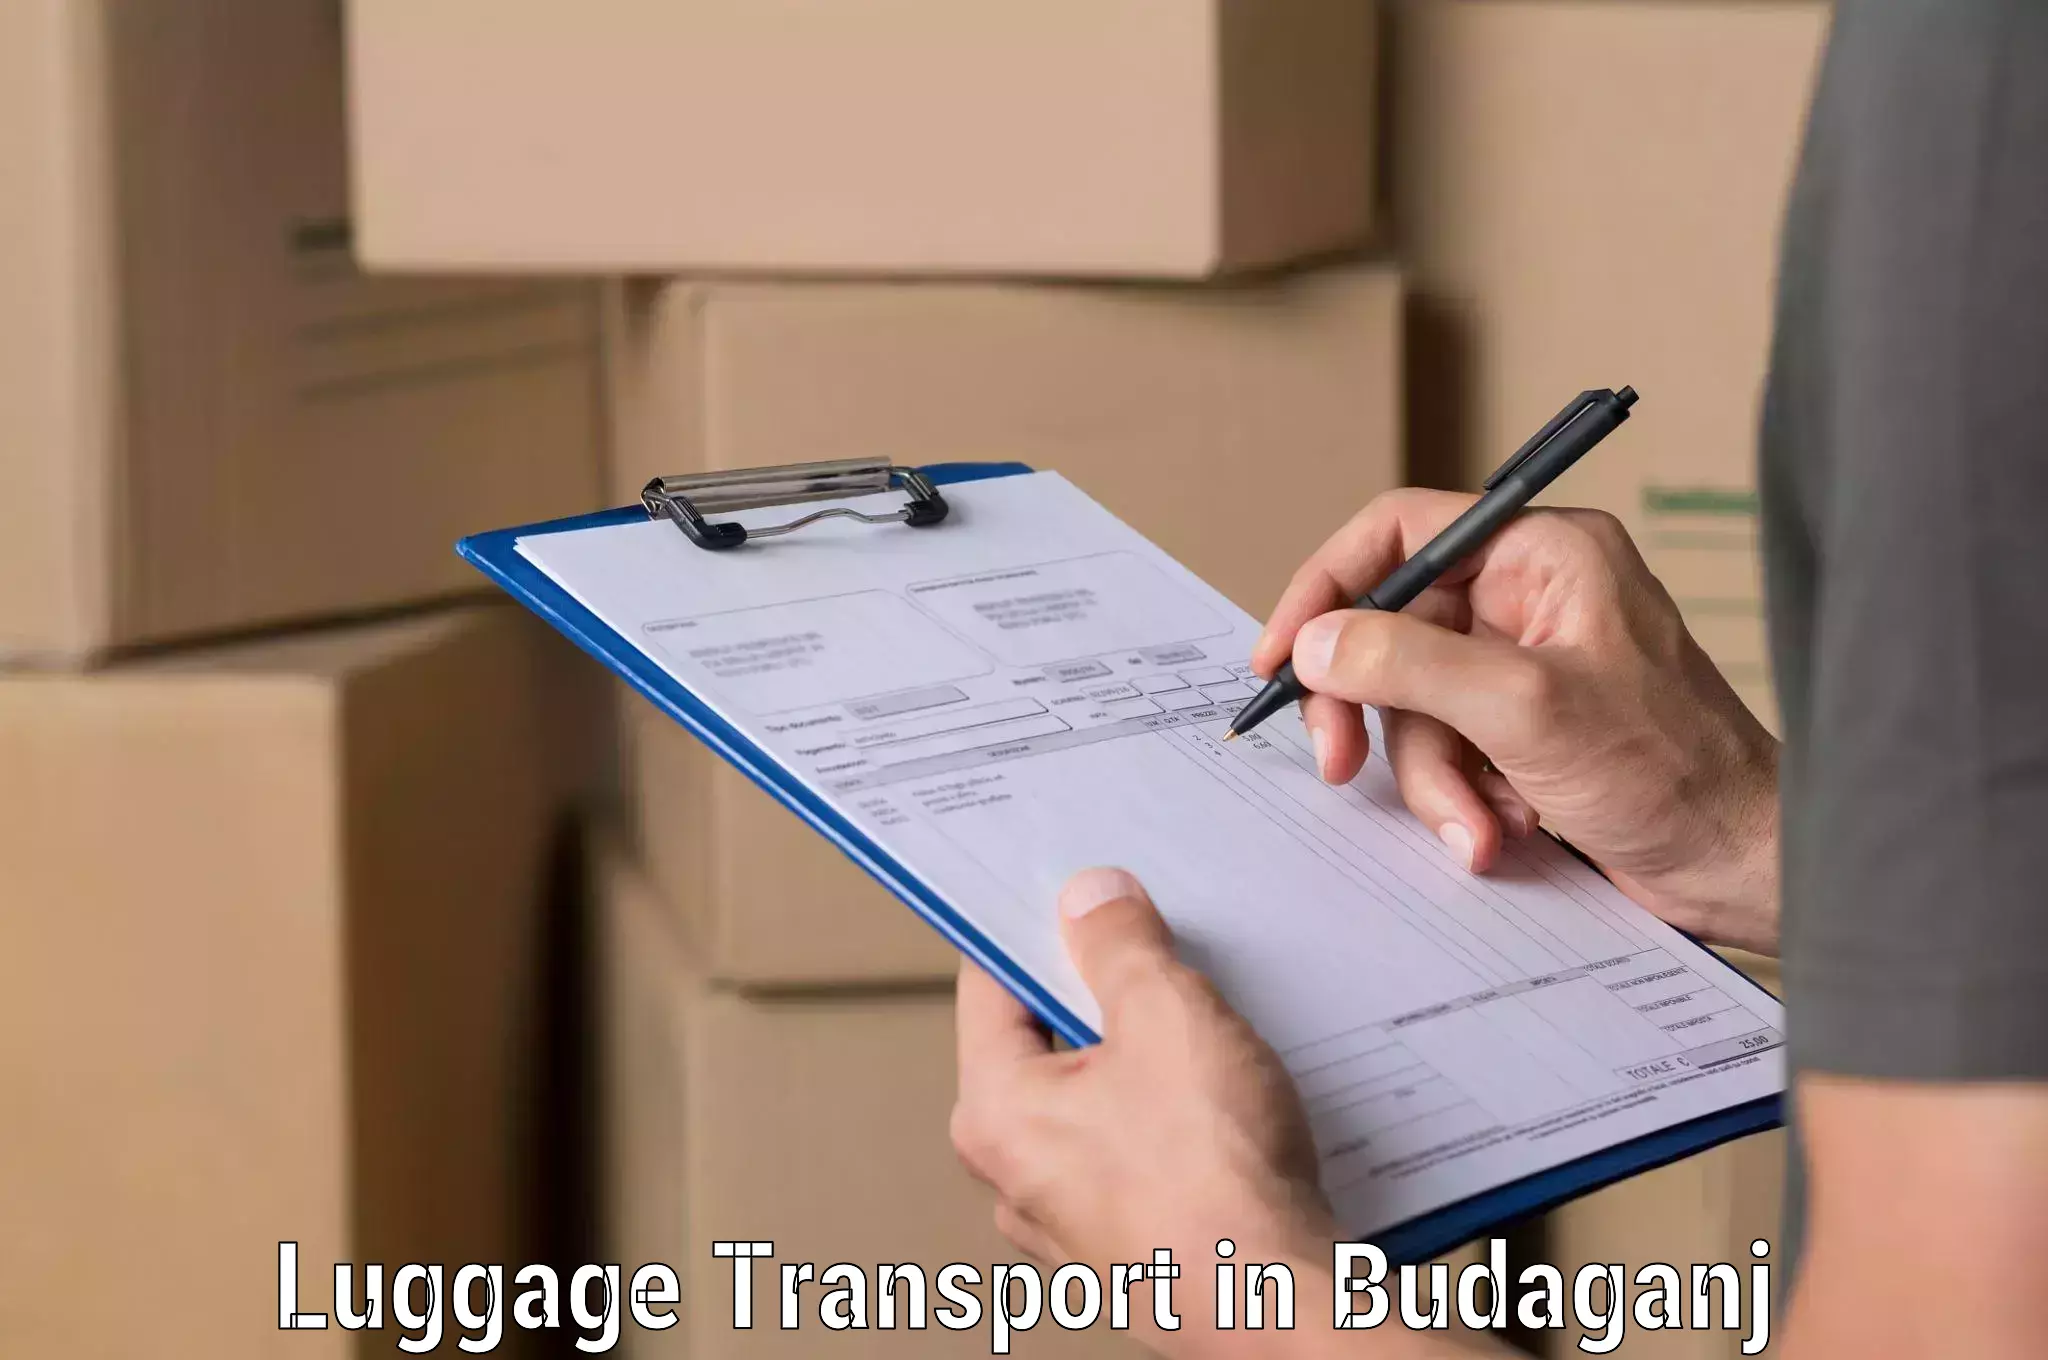 Emergency baggage service in Budaganj